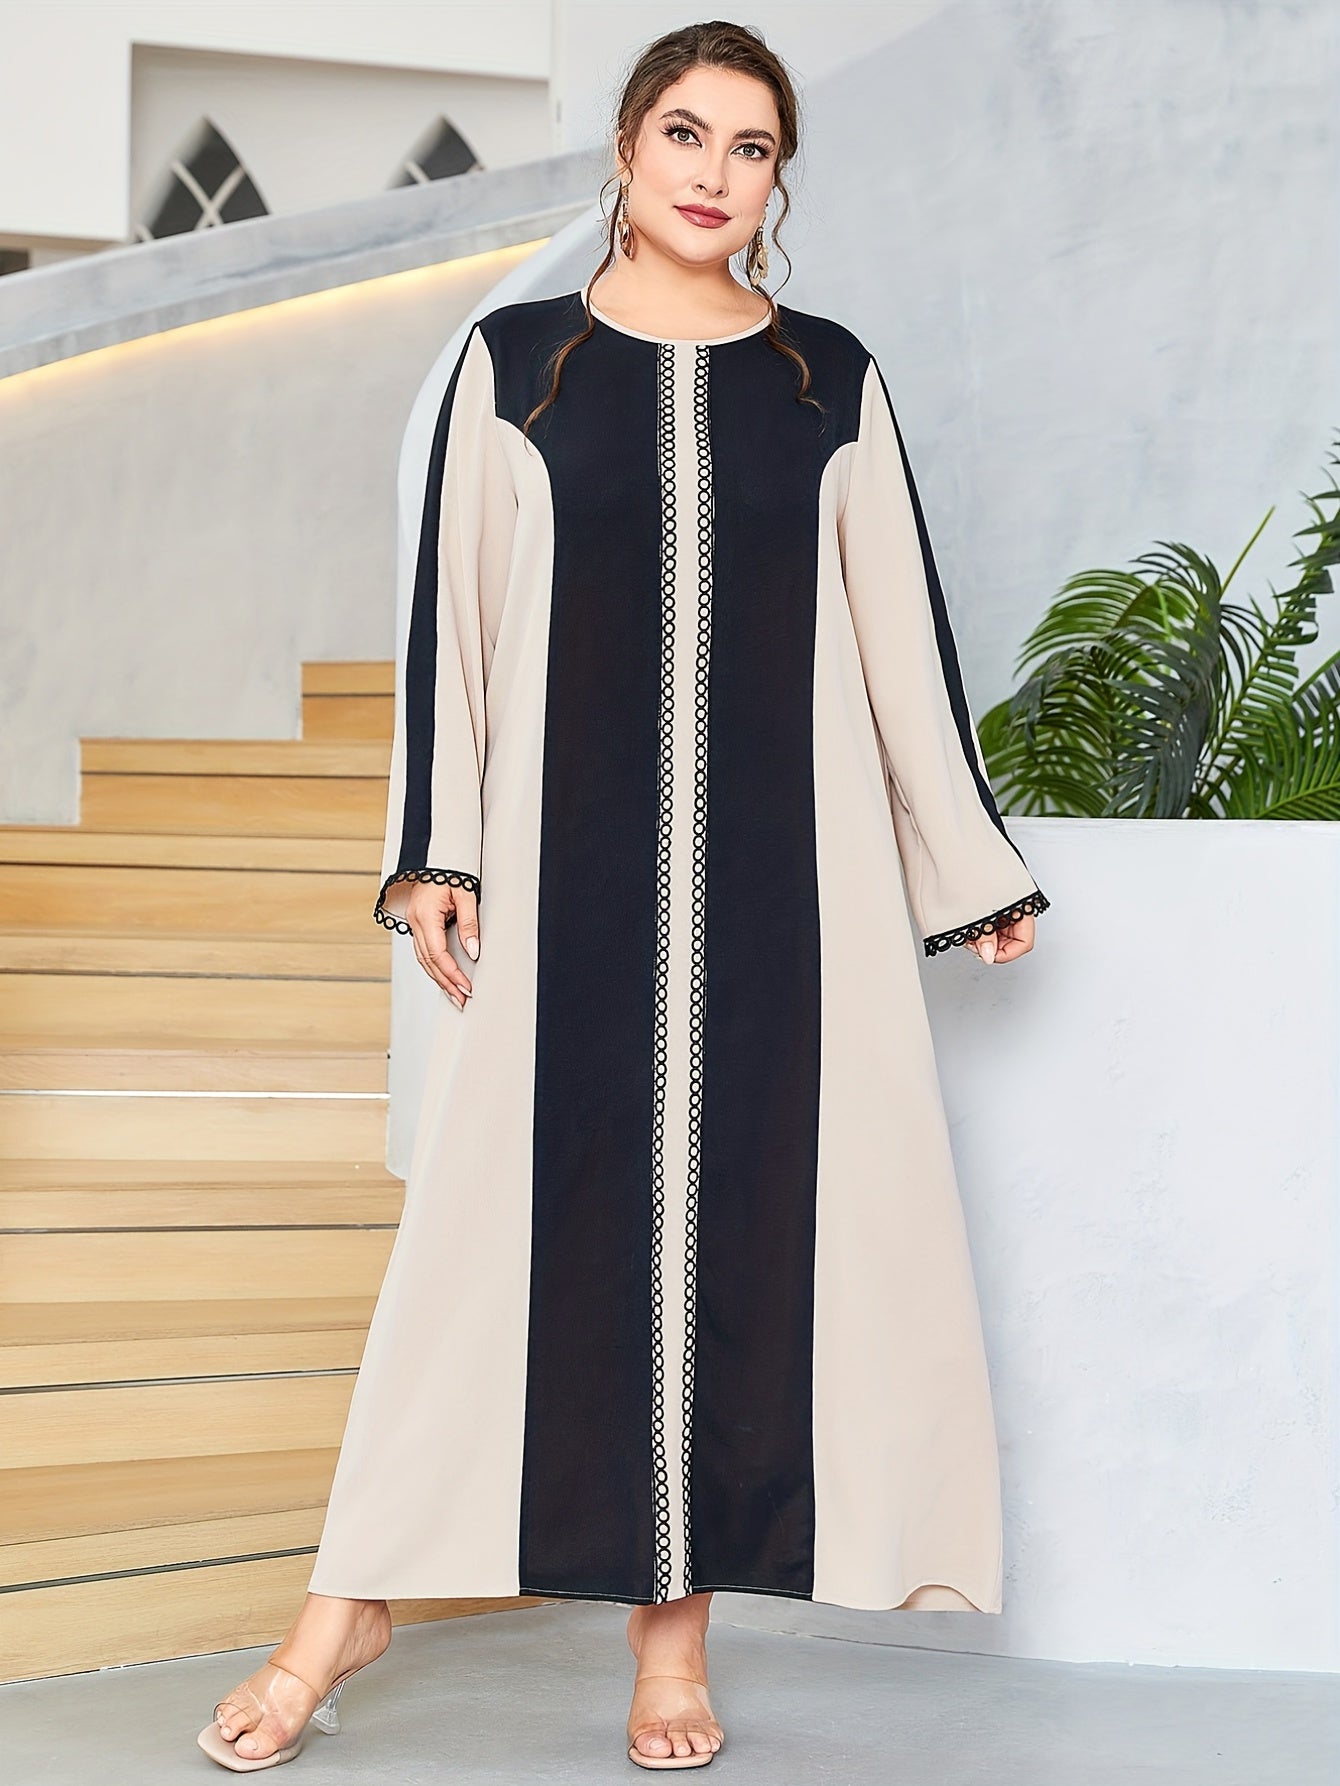 Antmvs Plus Size Casual Dress, Women's Plus Colorblock Long Sleeve Round Neck Maxi Dress